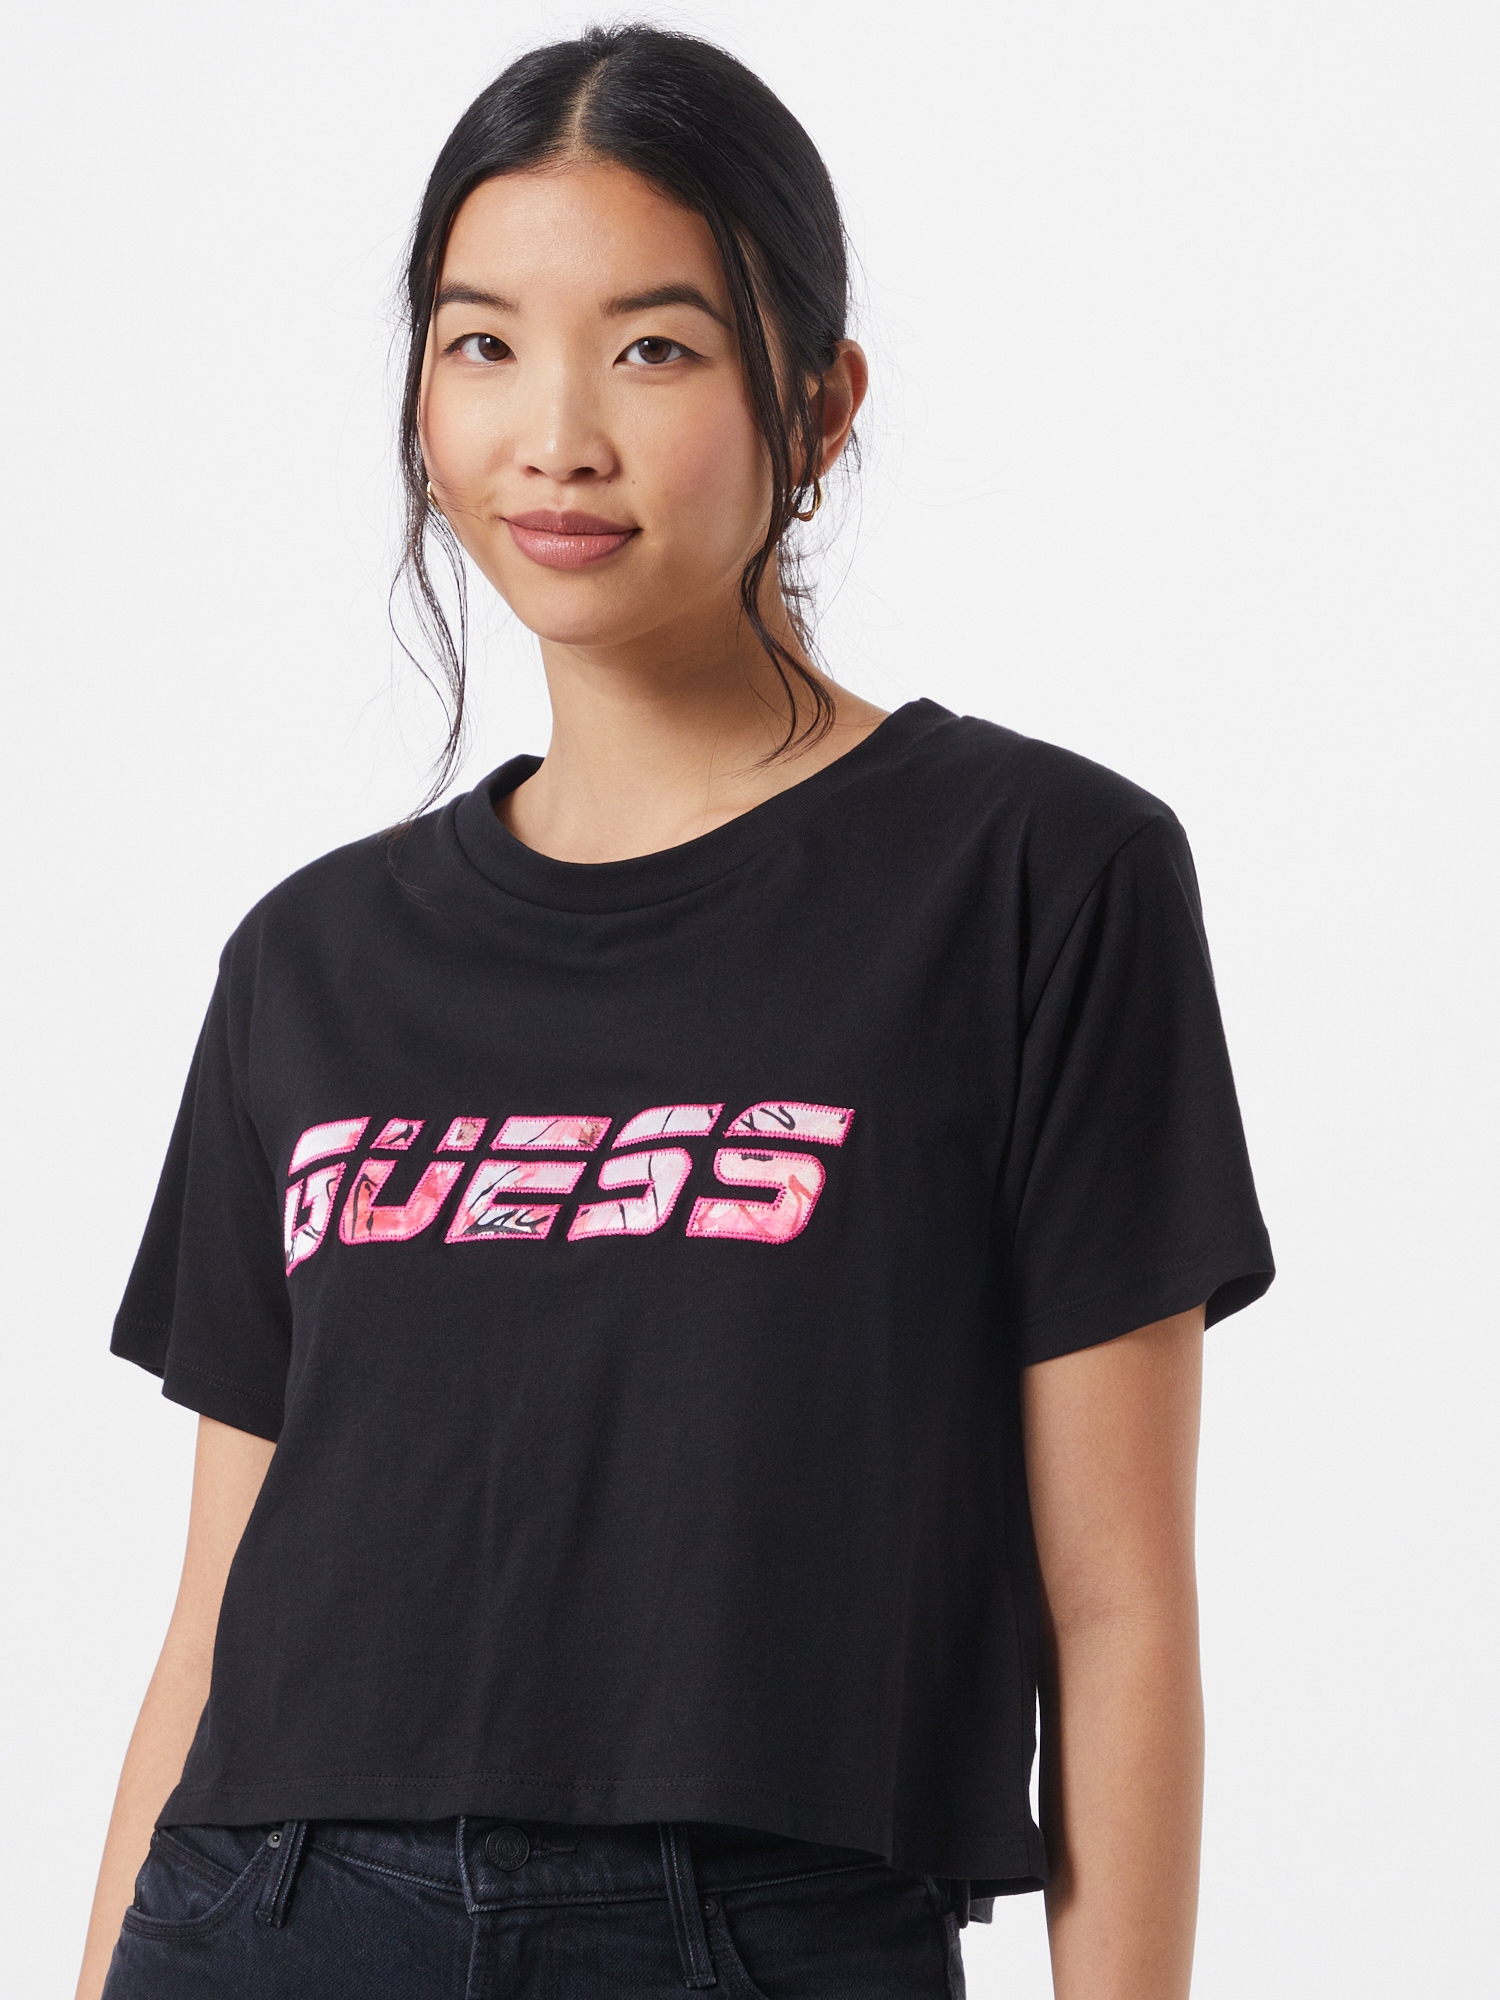 GUESS Shirt  black / pink / white